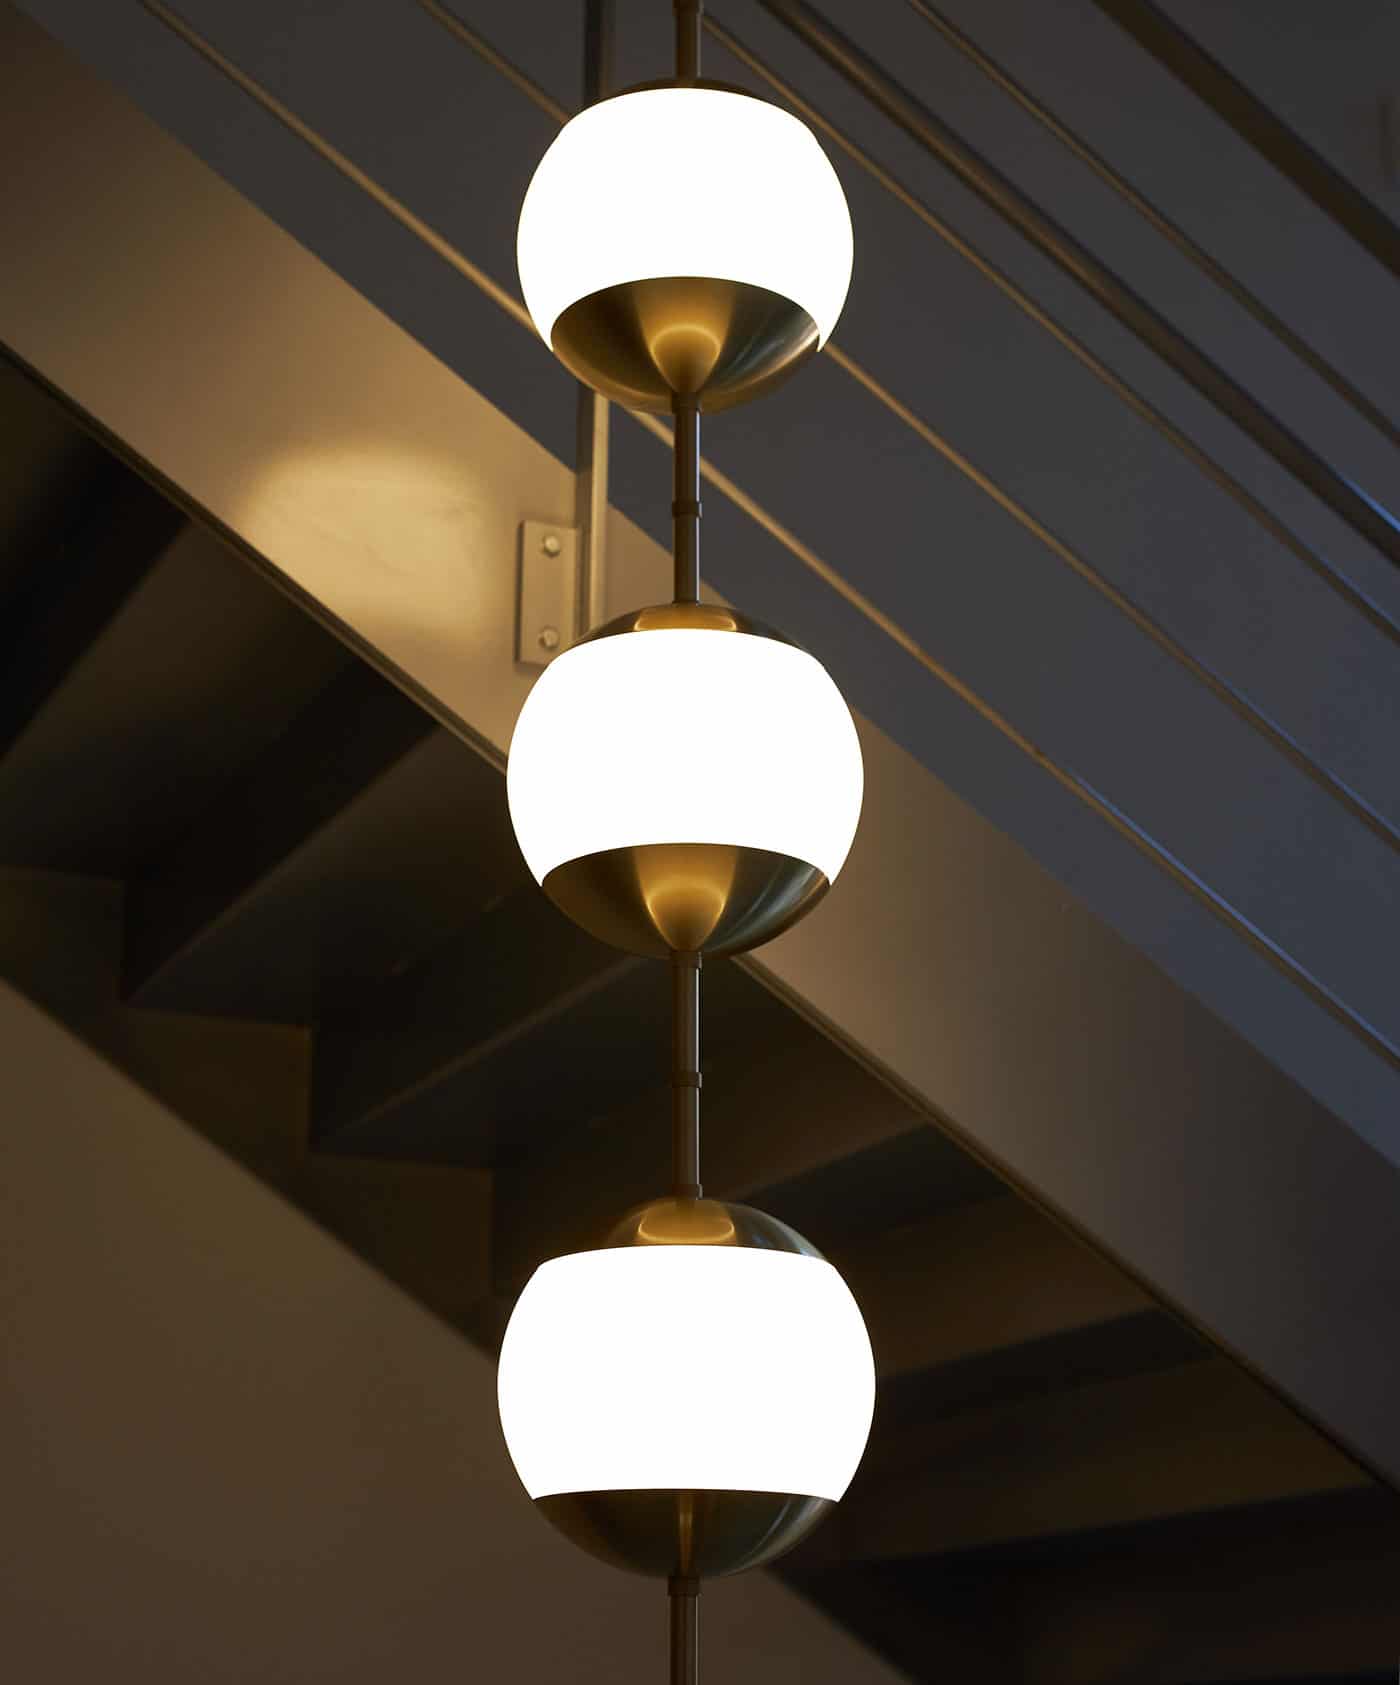 RUBN-staircase-lamp-monroes-pearl-three-opal-glass-globes-row-brass-steel-1